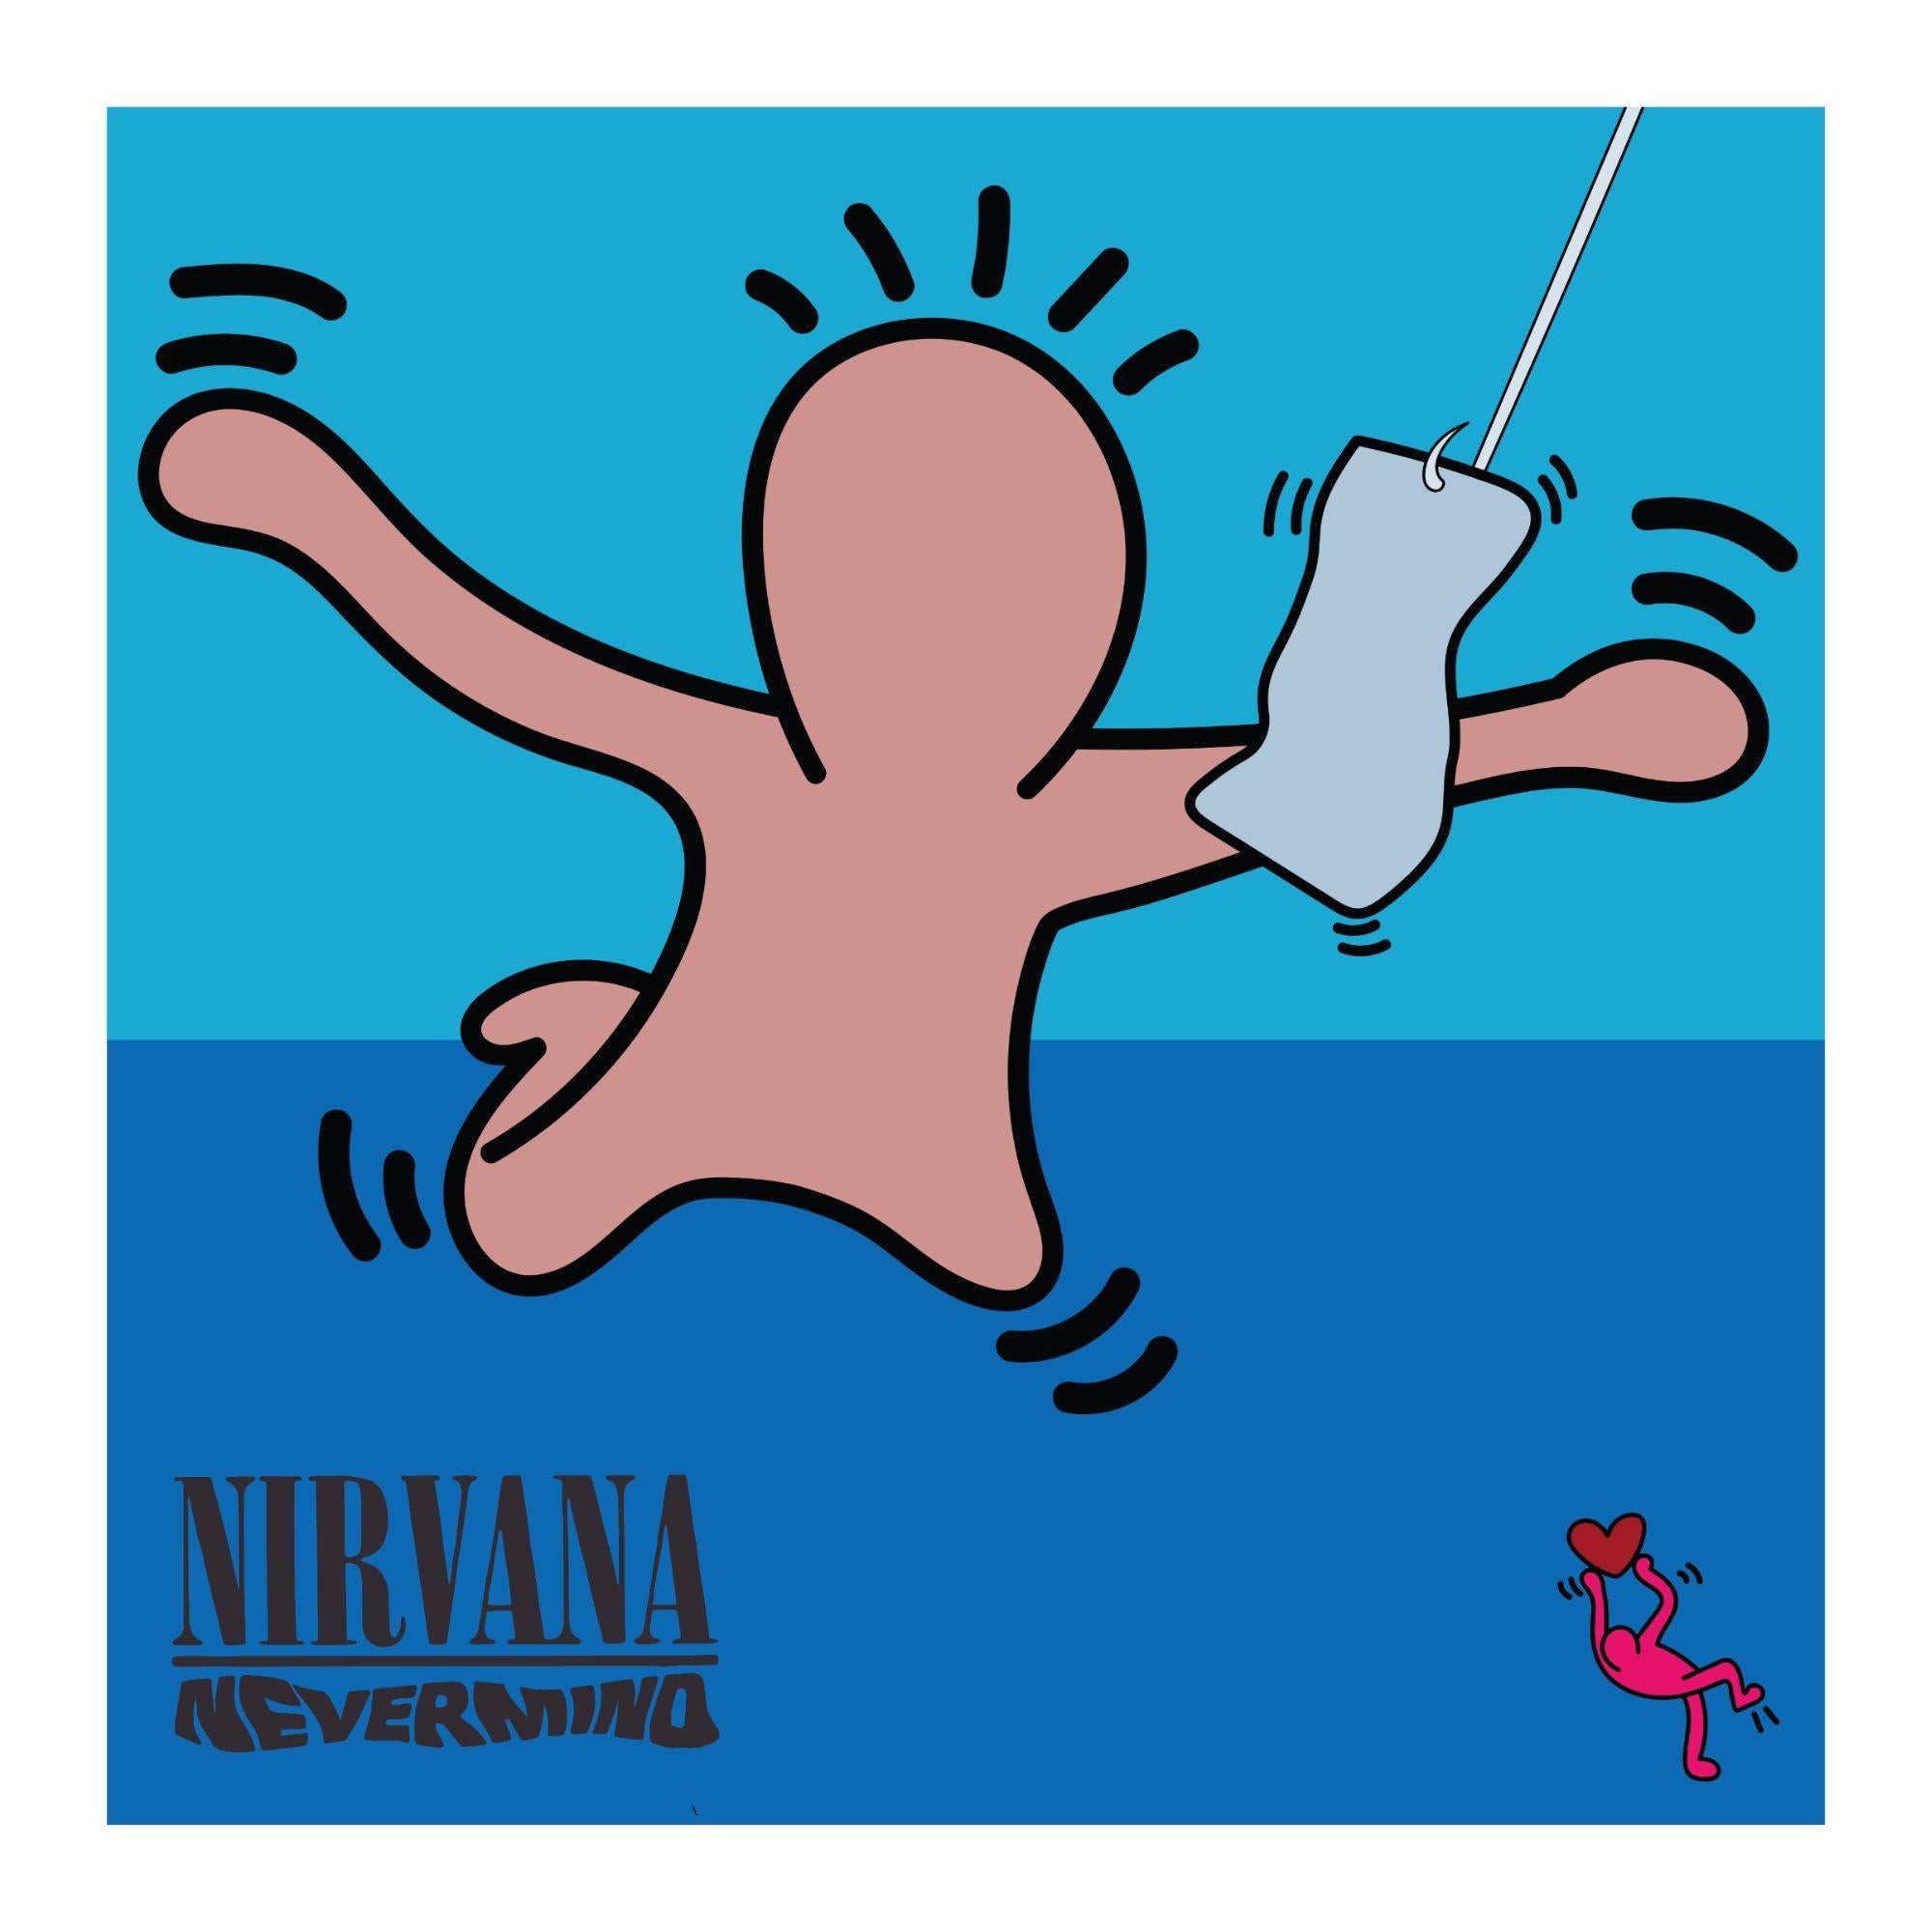 Nirvana - Print by Tboy